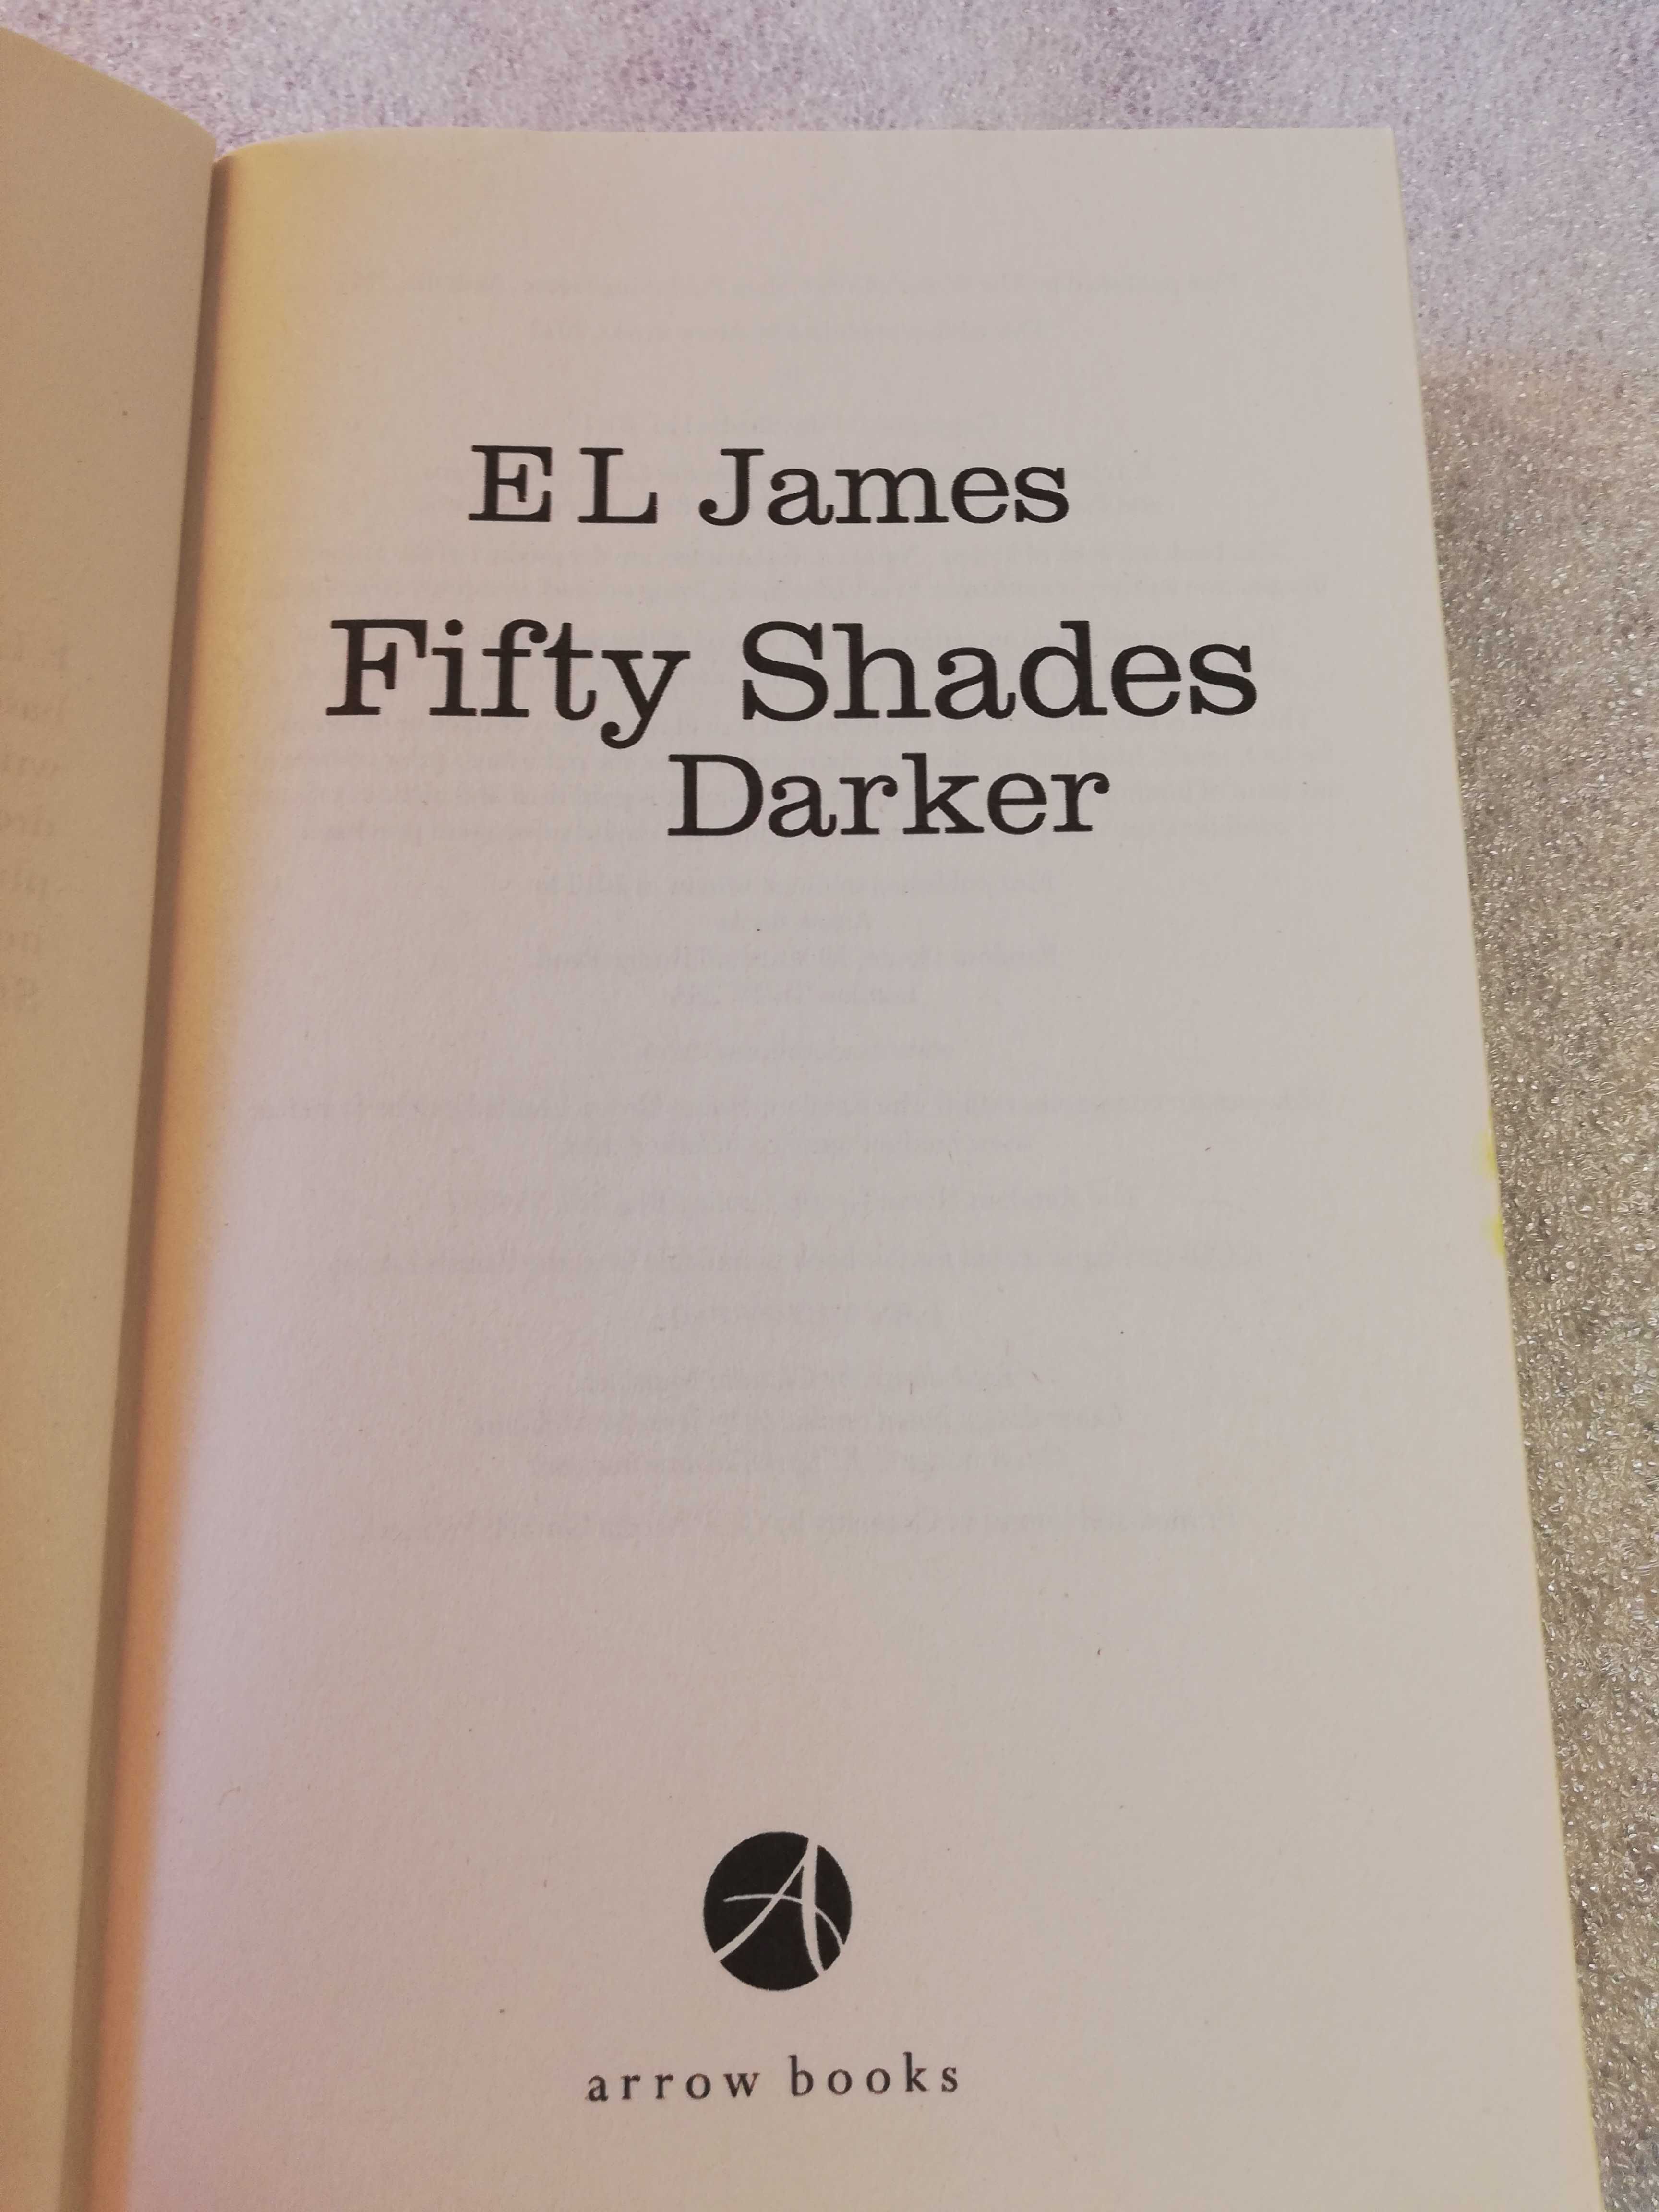 Fifty Shades of Grey + Fifty Shades Darker - El James - j. angielski